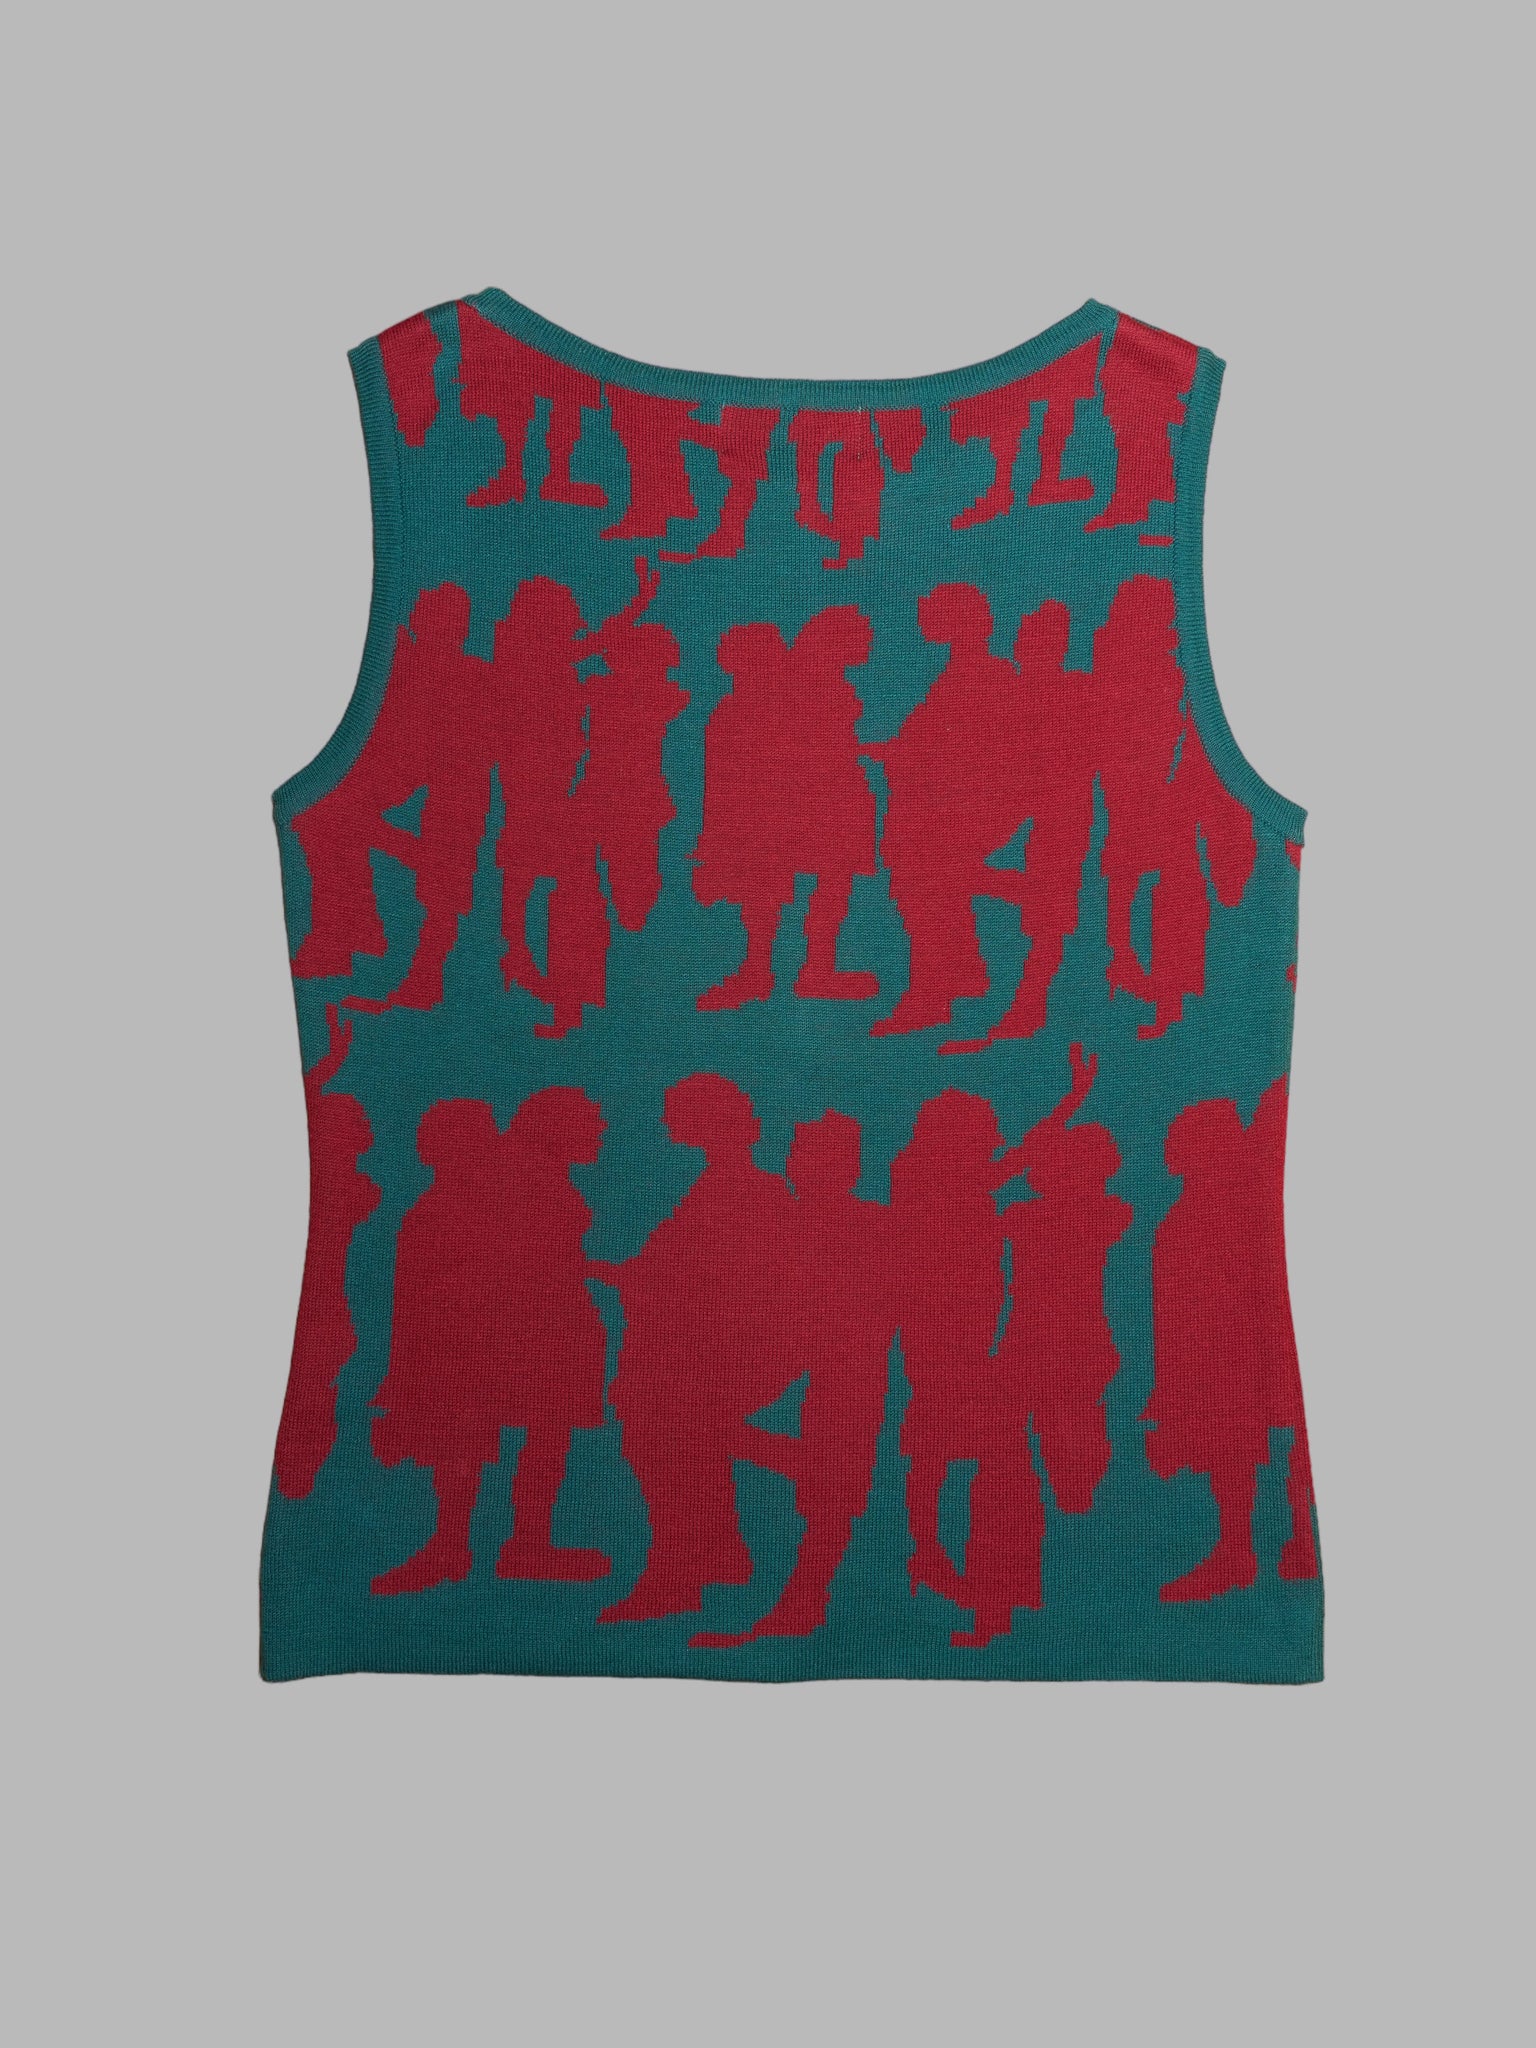 Jocomomola de Sybilla green knitted cotton vest with red dancing figures